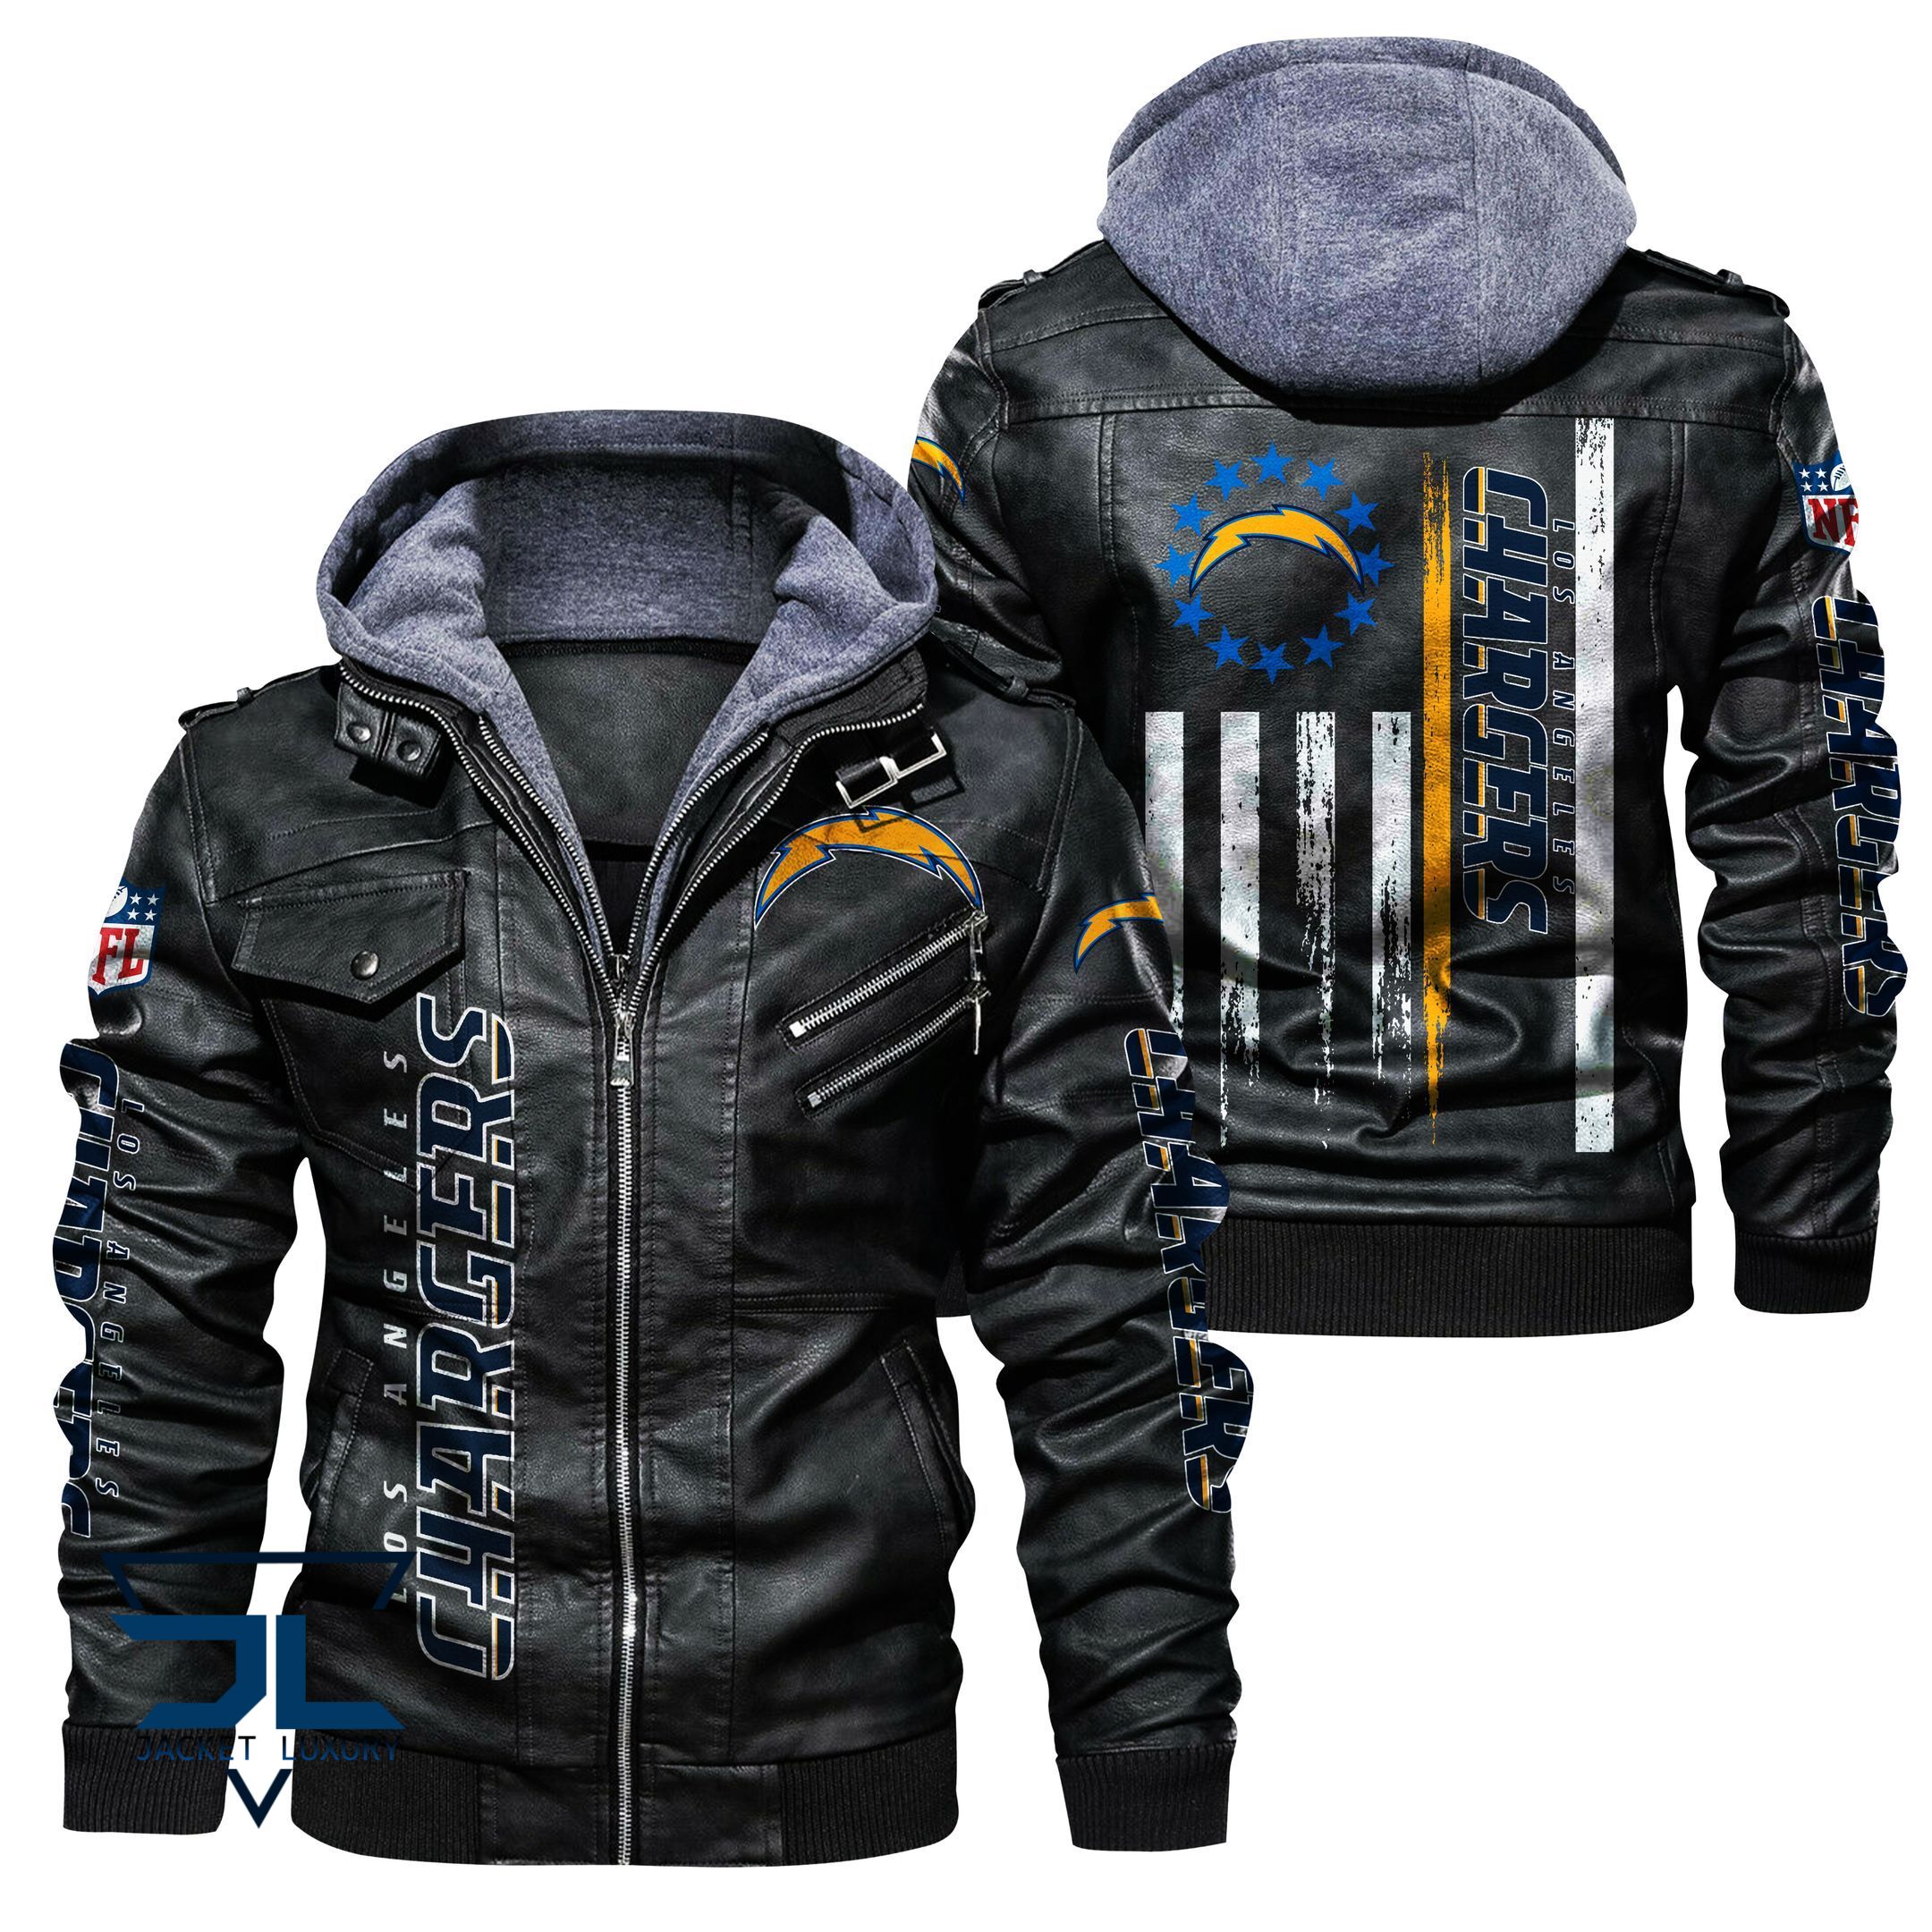 What Leather jacket Sells Best on Techcomshop? 43